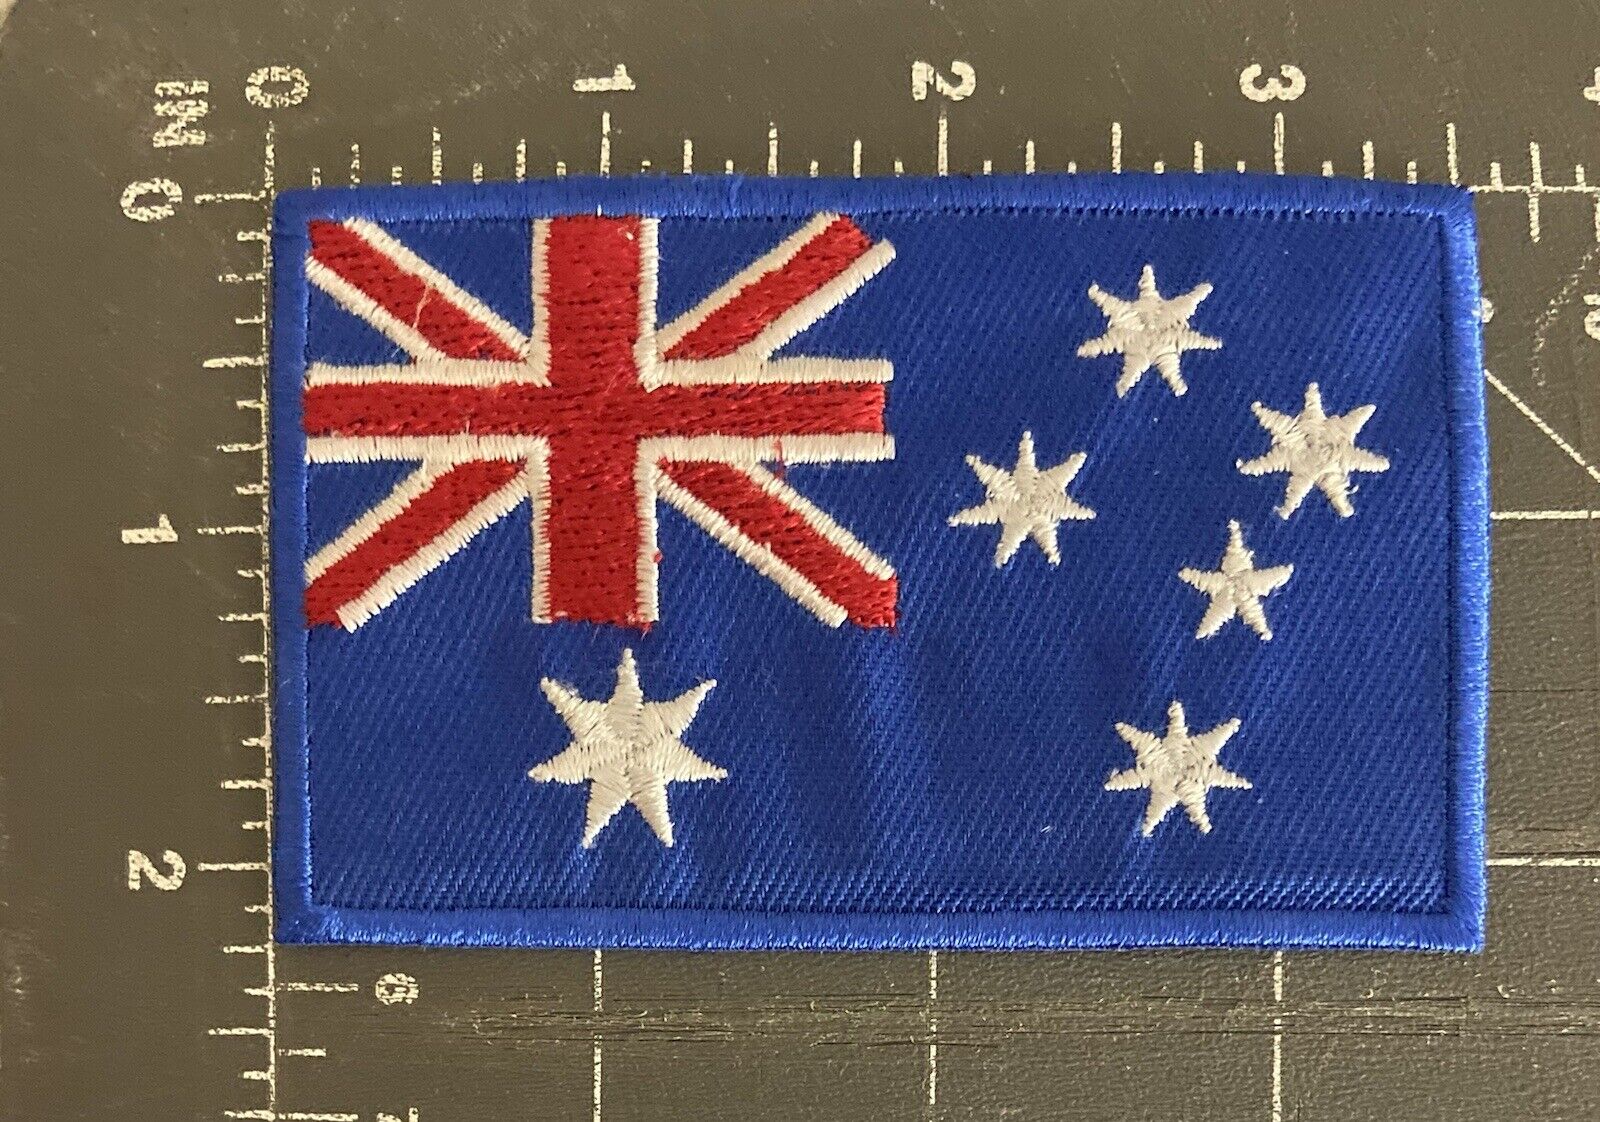 Australia National Flag Patch Badge Southern Cross Constellation Australian